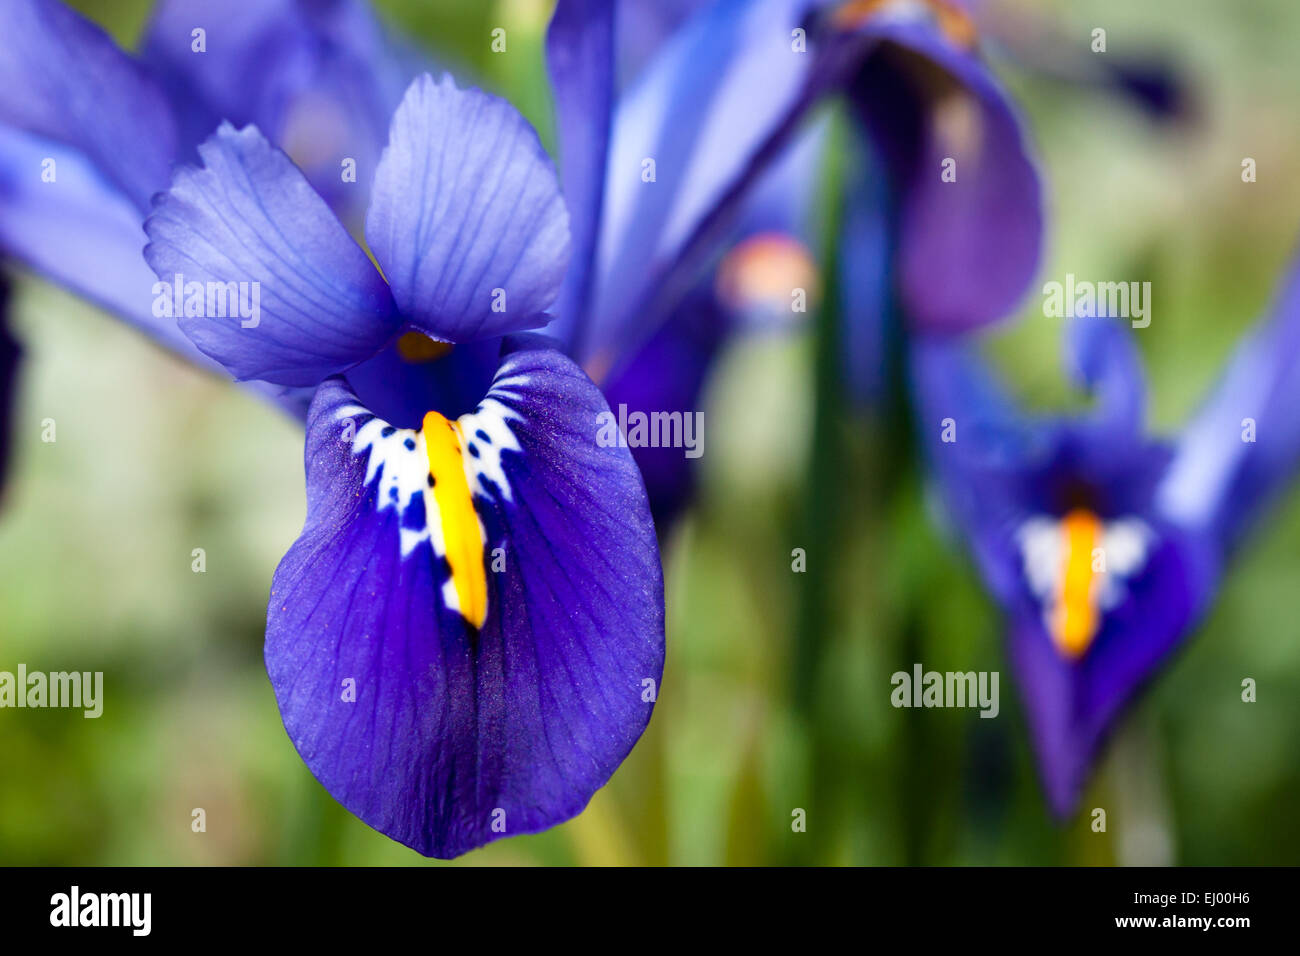 Dwarf iris in full bloom. Stock Photo